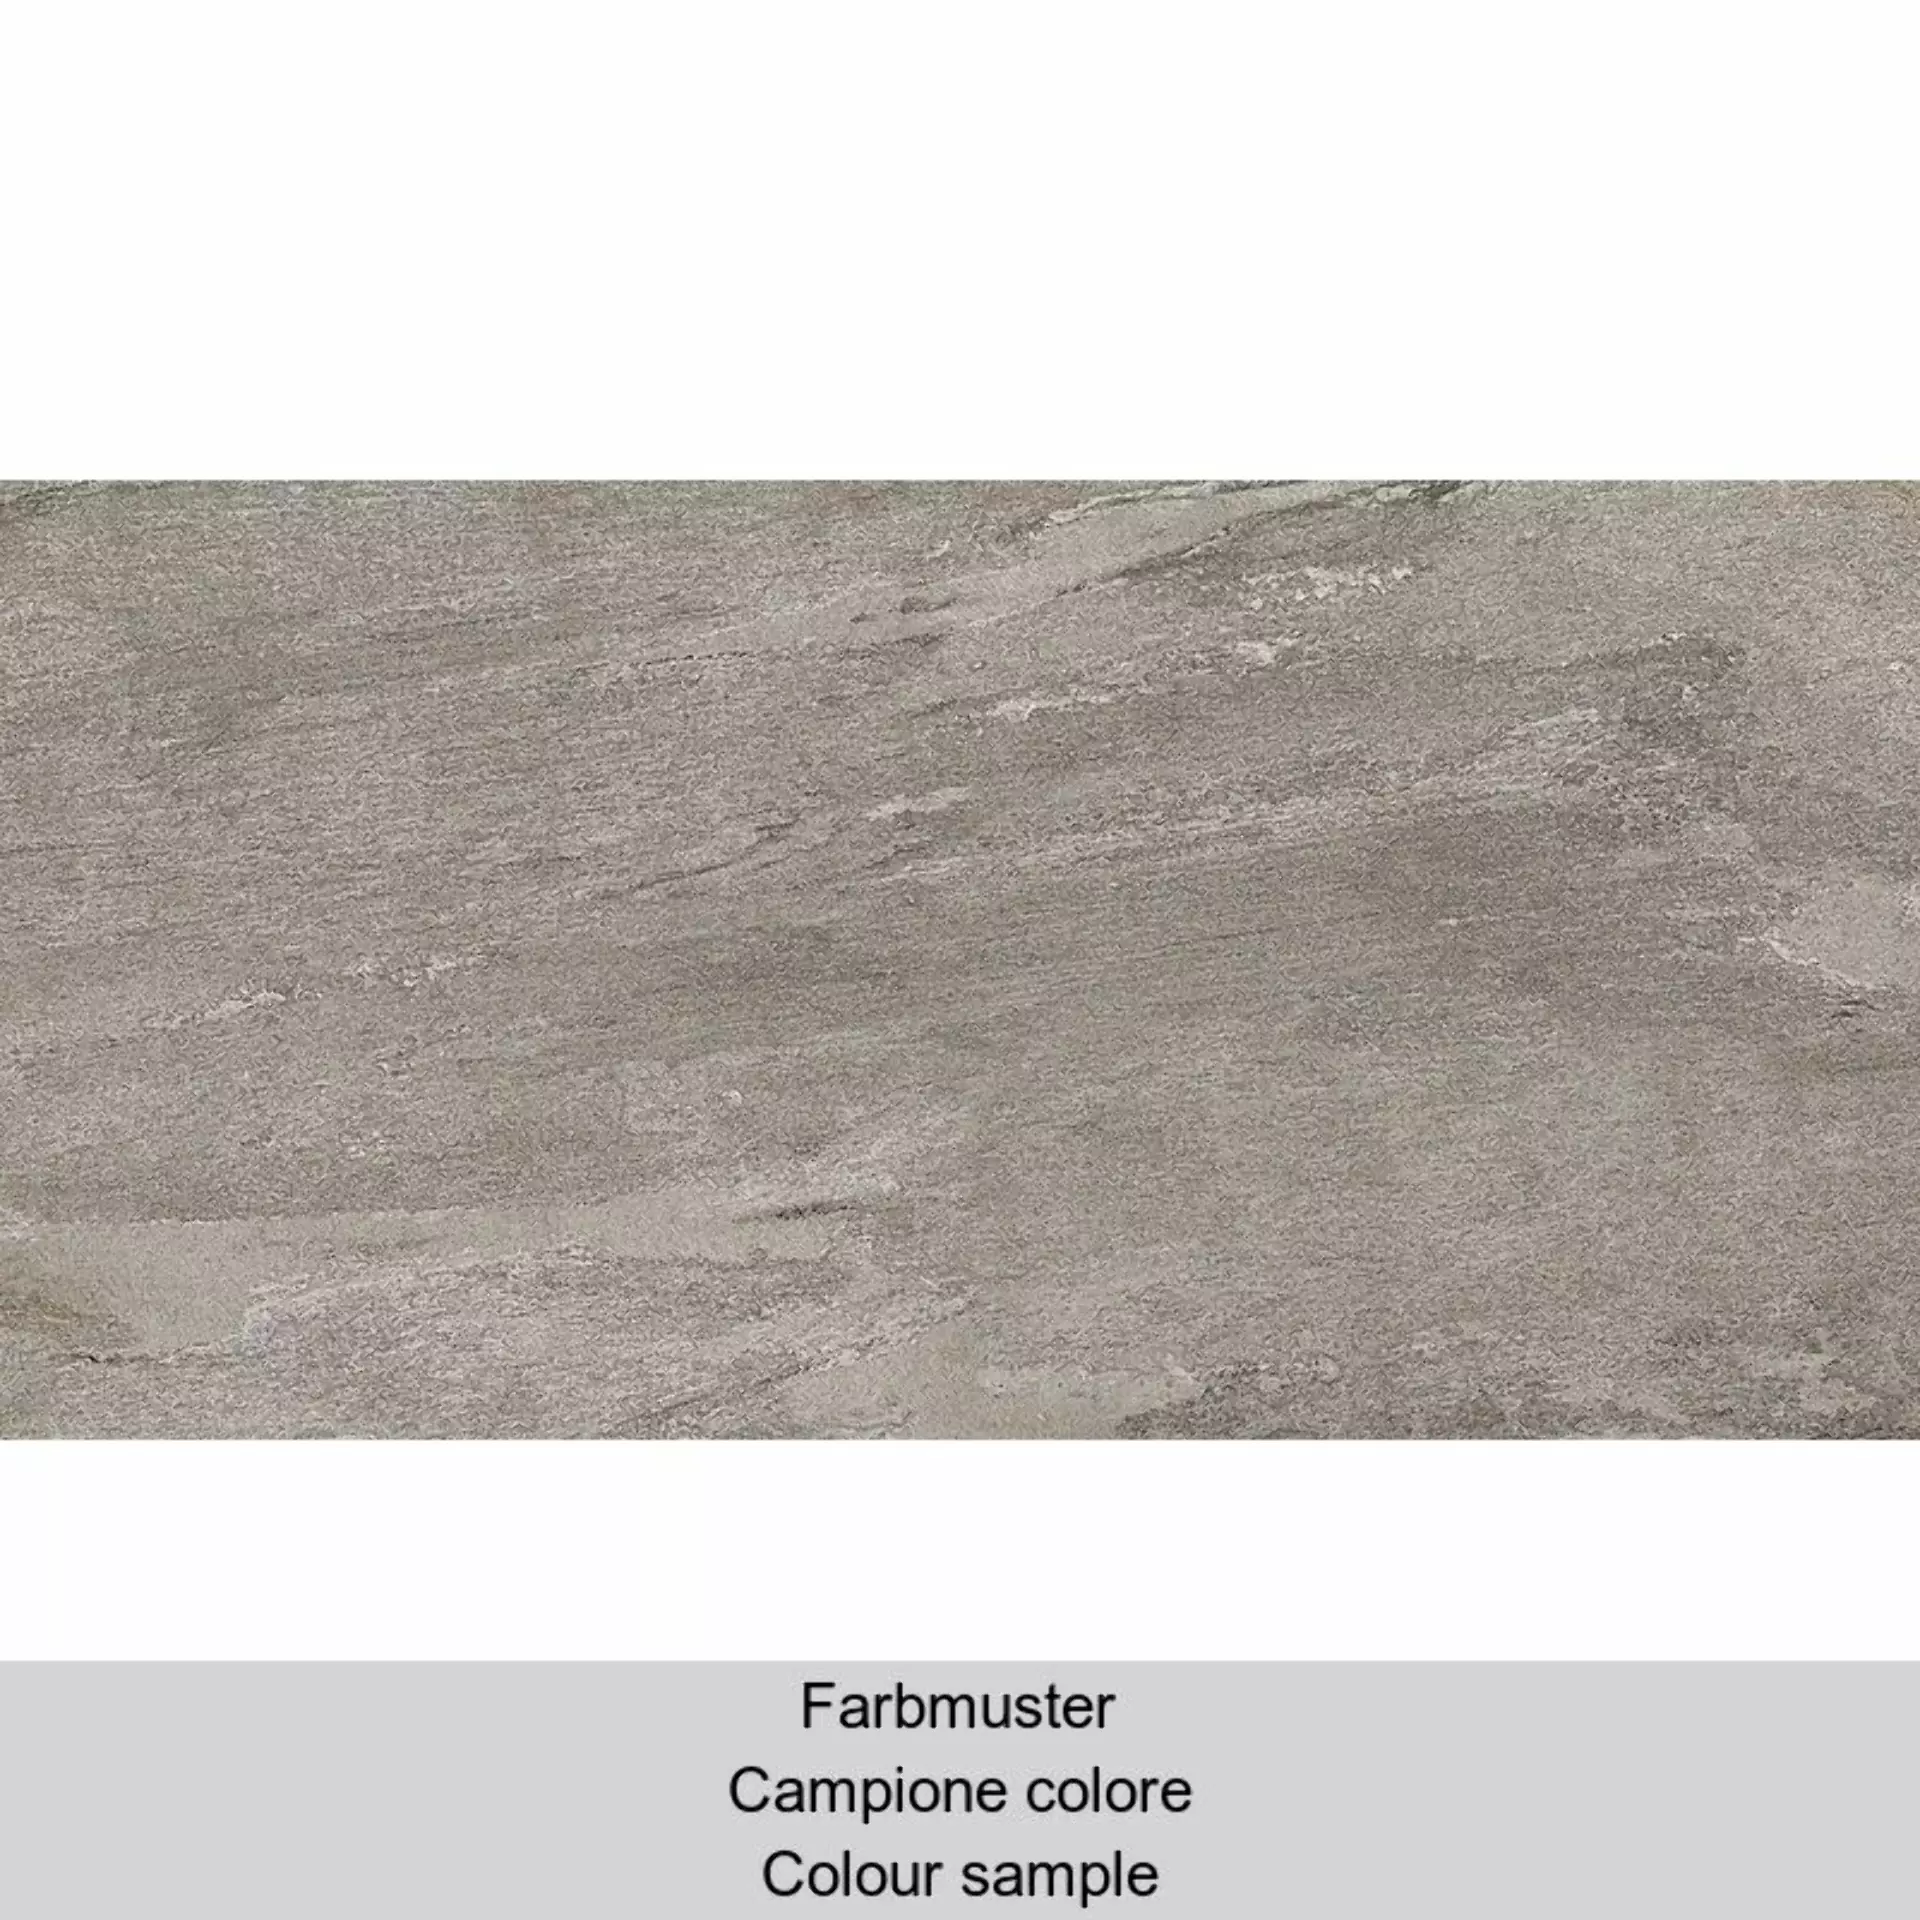 Century Stonerock Ash Stone Two – Grip 0119808 50x100cm rectified 20mm